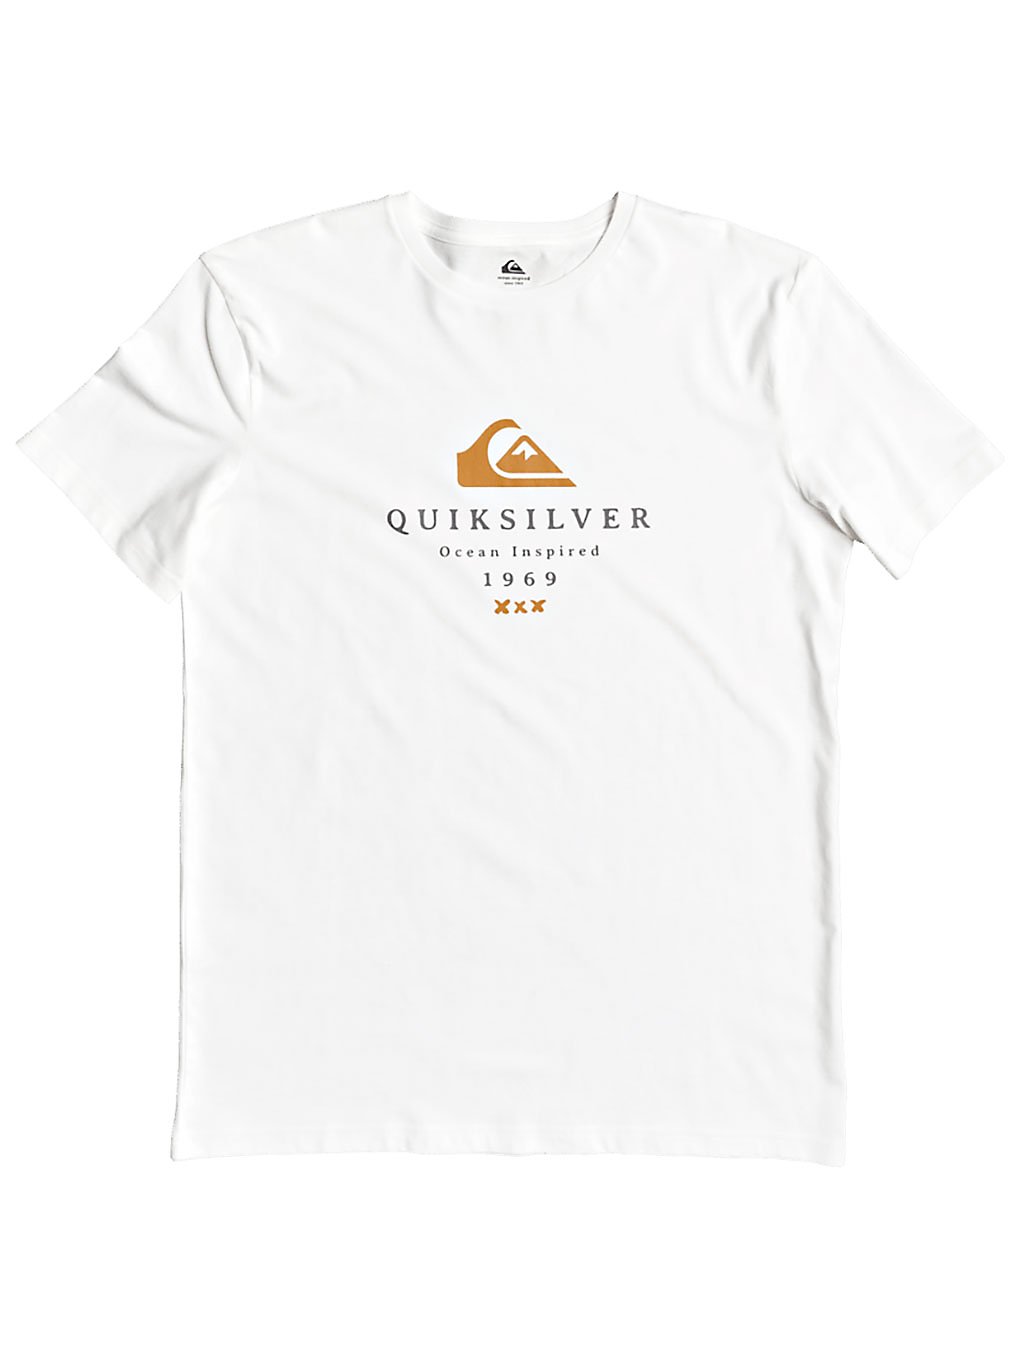 Quiksilver First Fire T-Shirt snow white